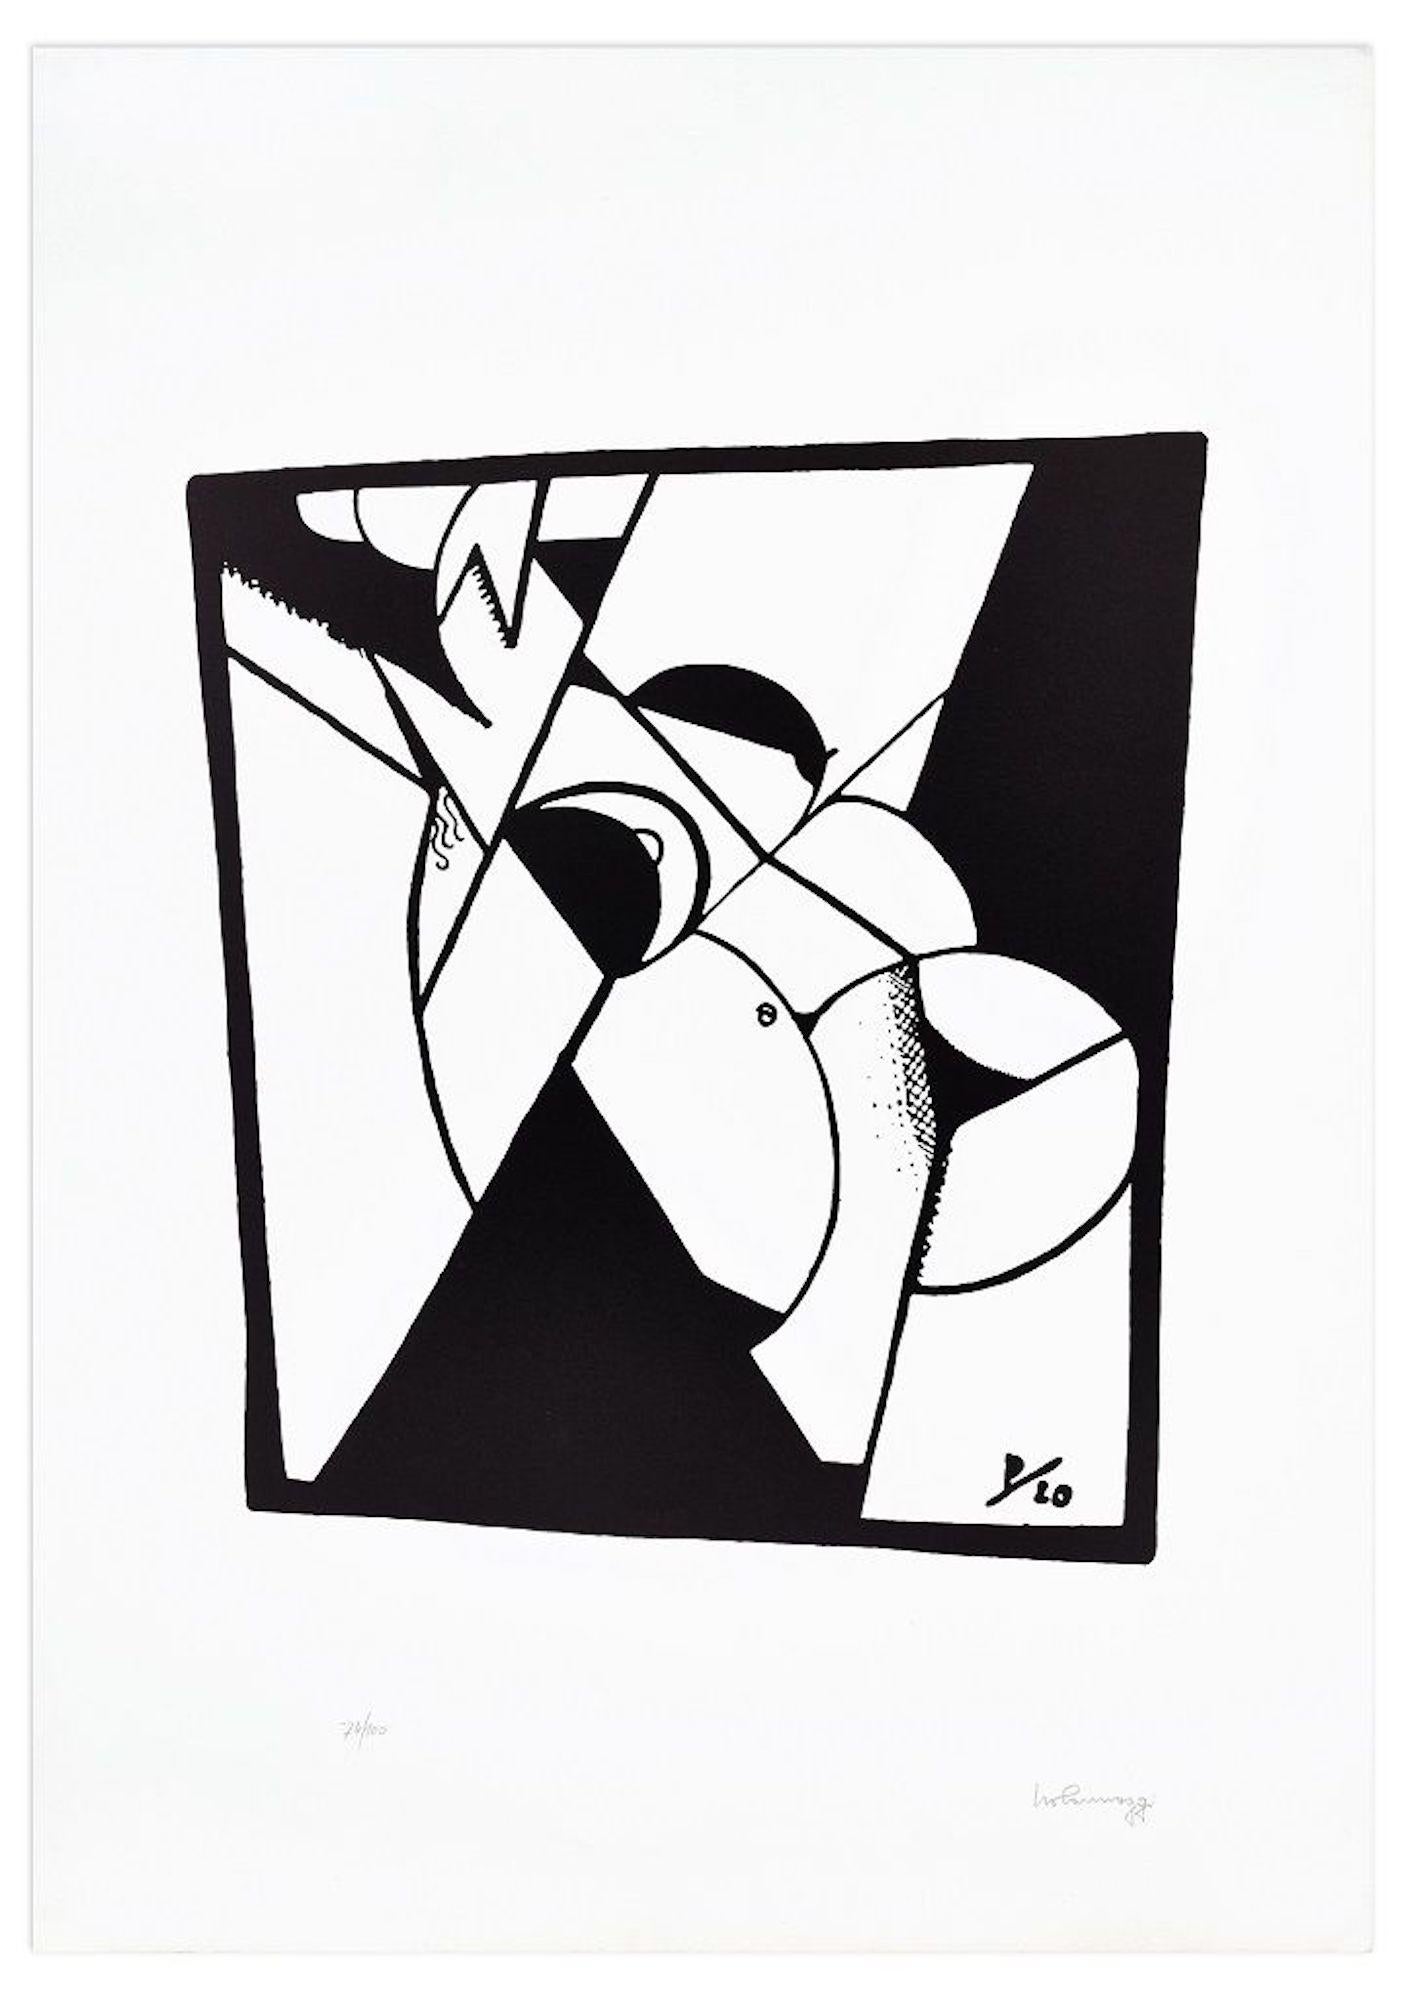 Female Nude - Original Lithograph by Ivo Pannaggi - 1975 ca.